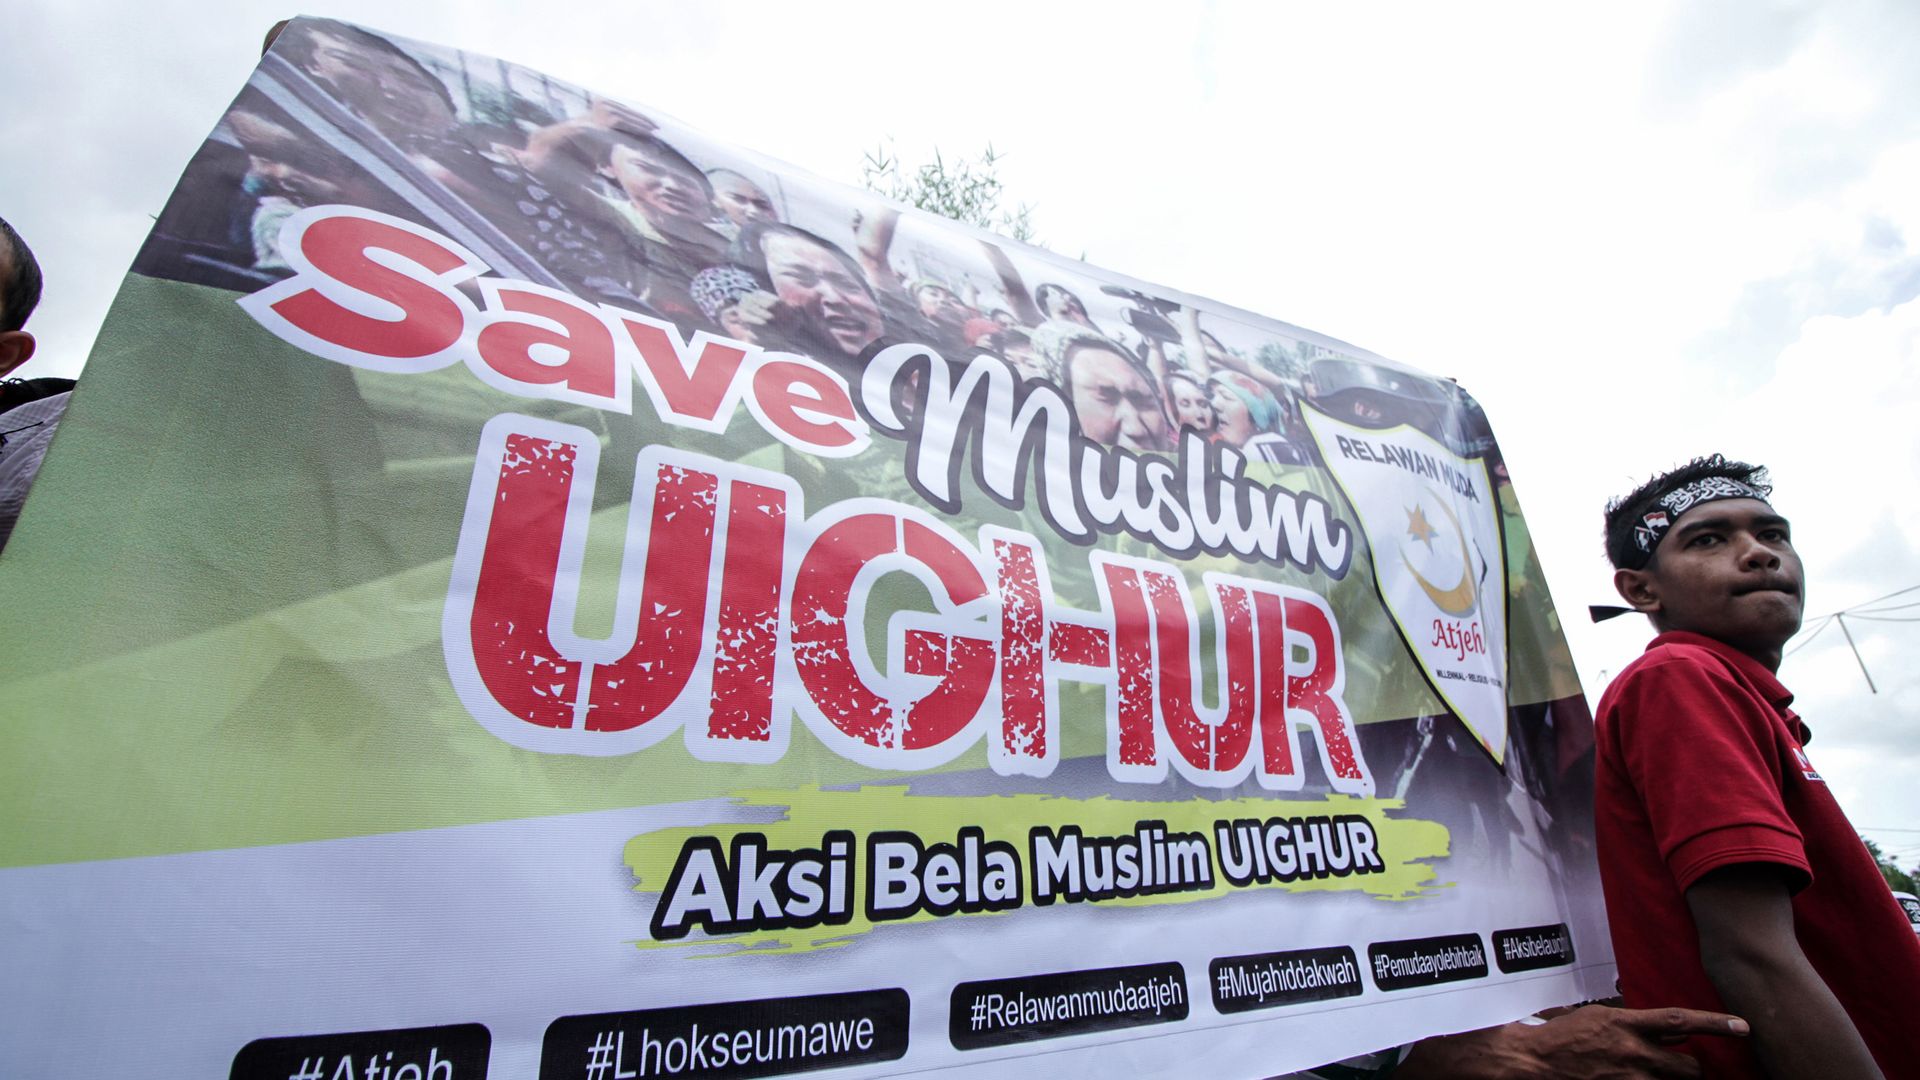 Save Muslim Uighur sign